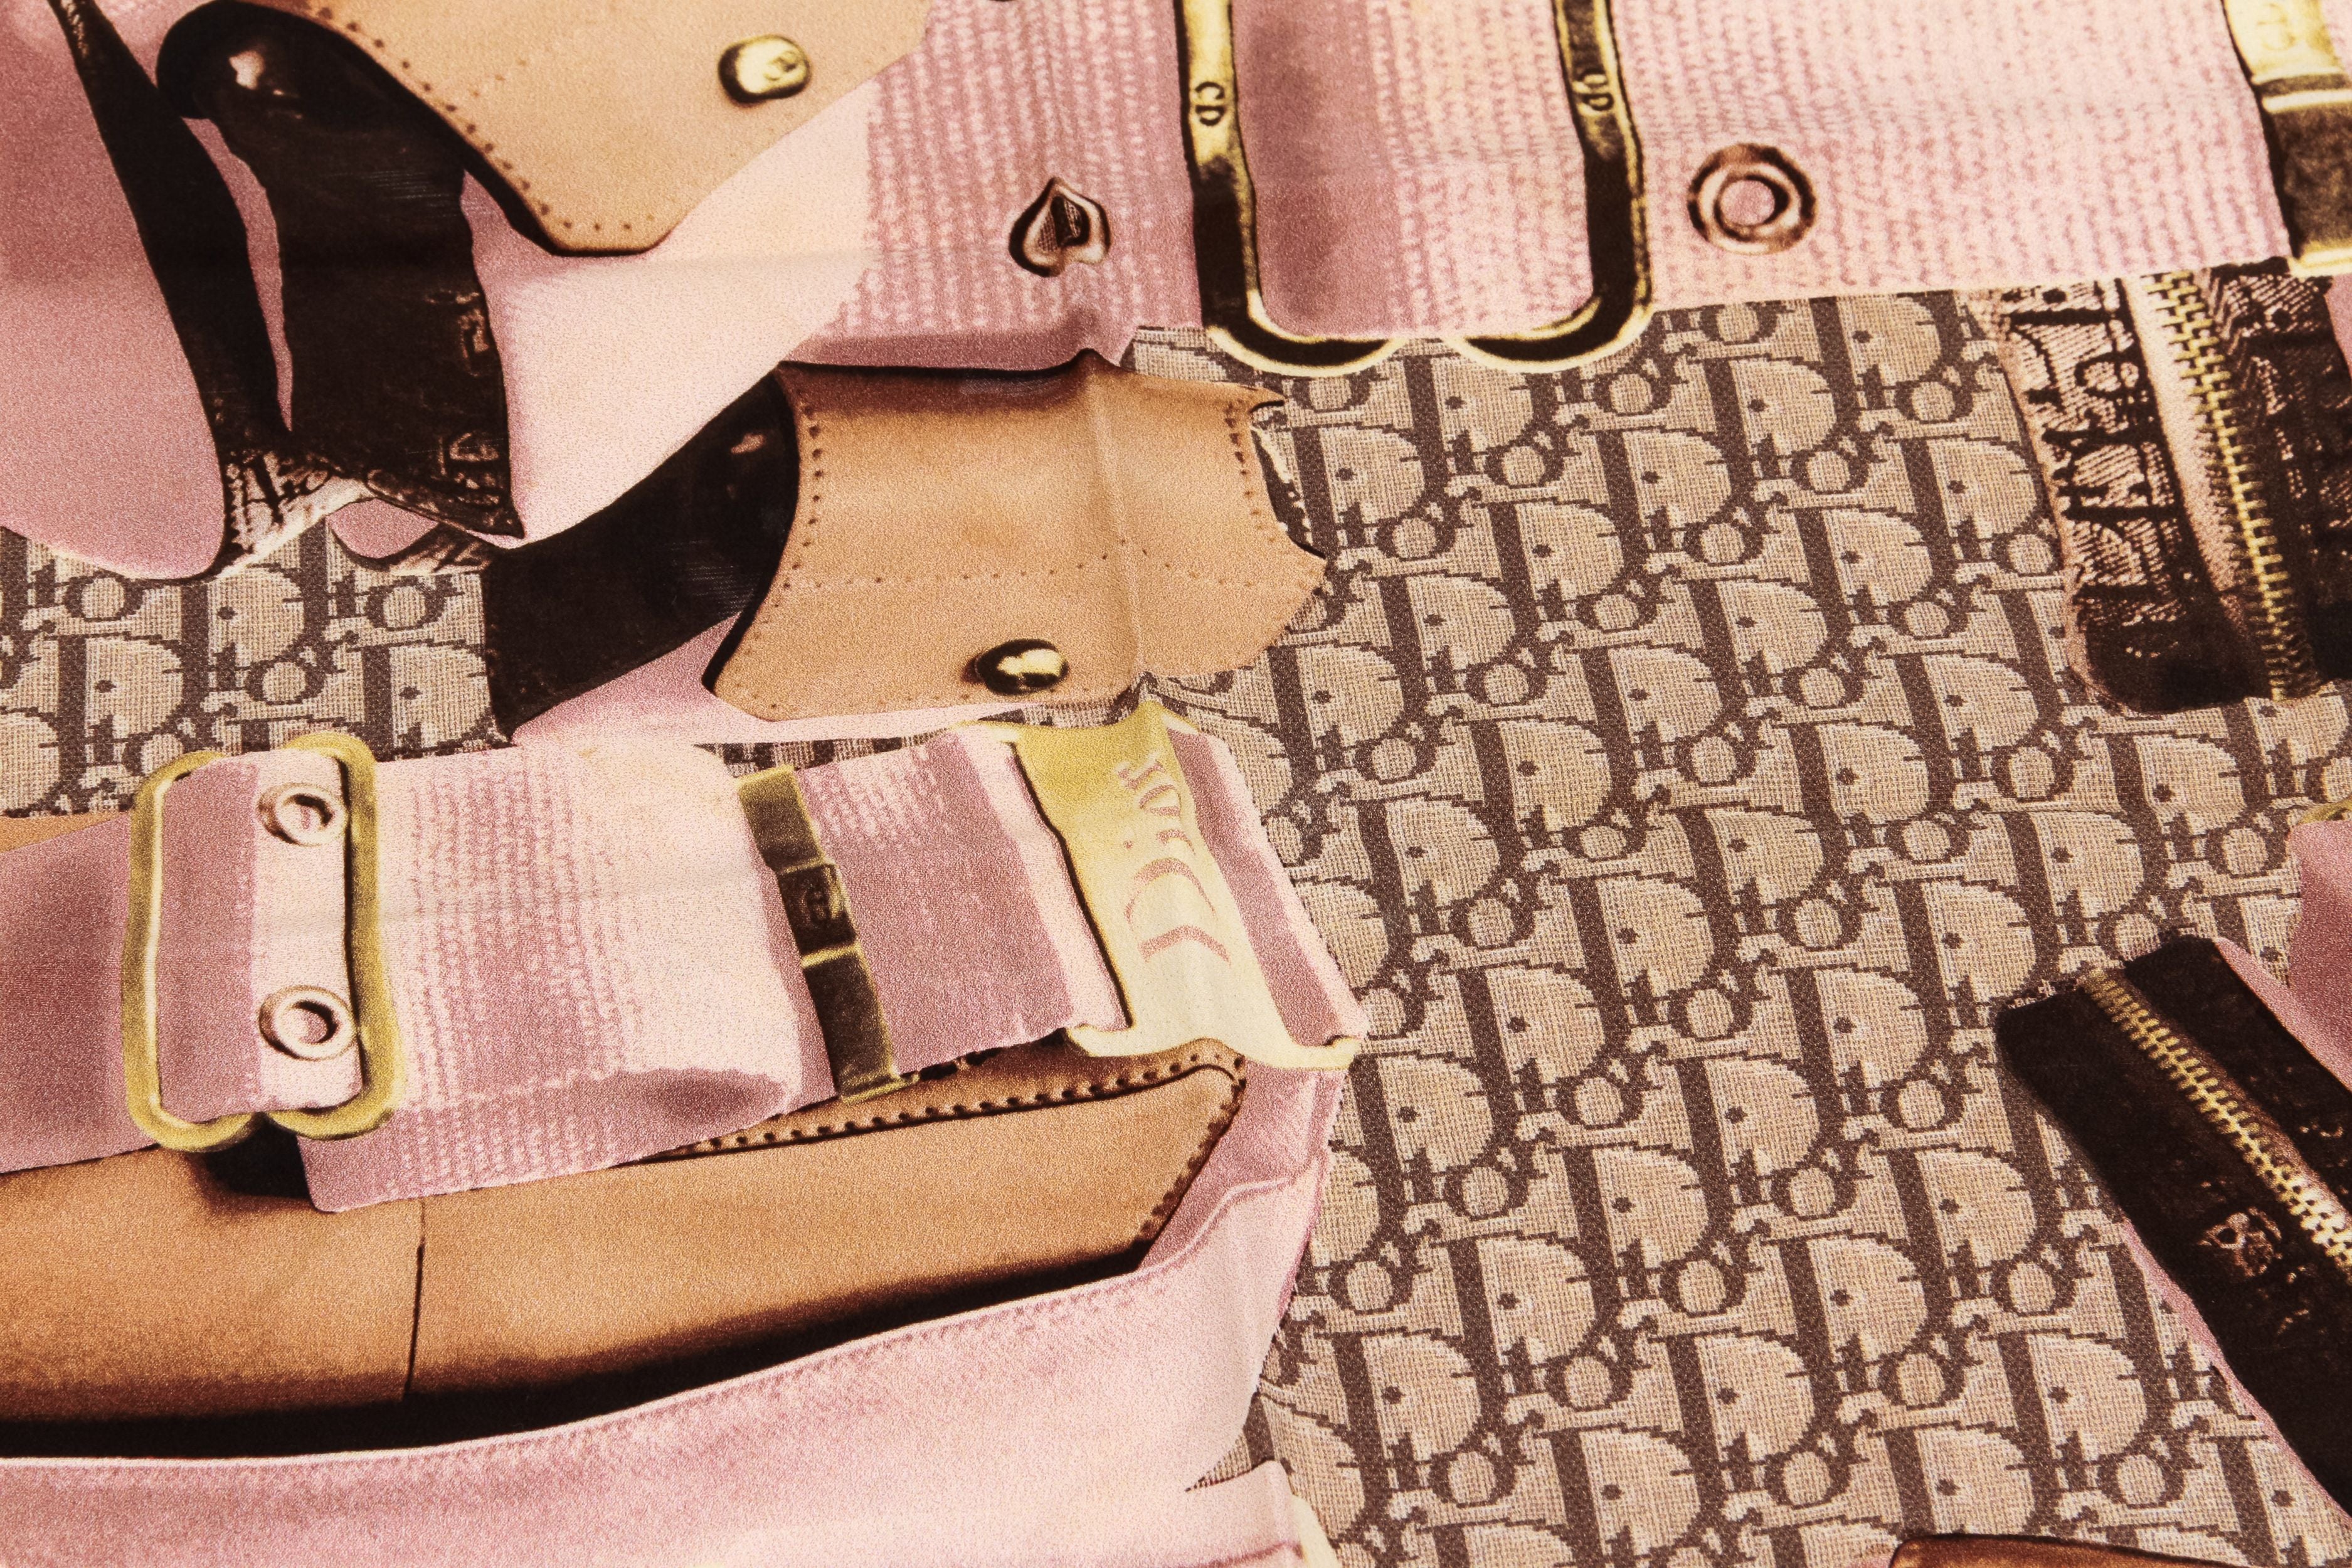 Dior monogram purses scarf pink & beige - Vintage Lux